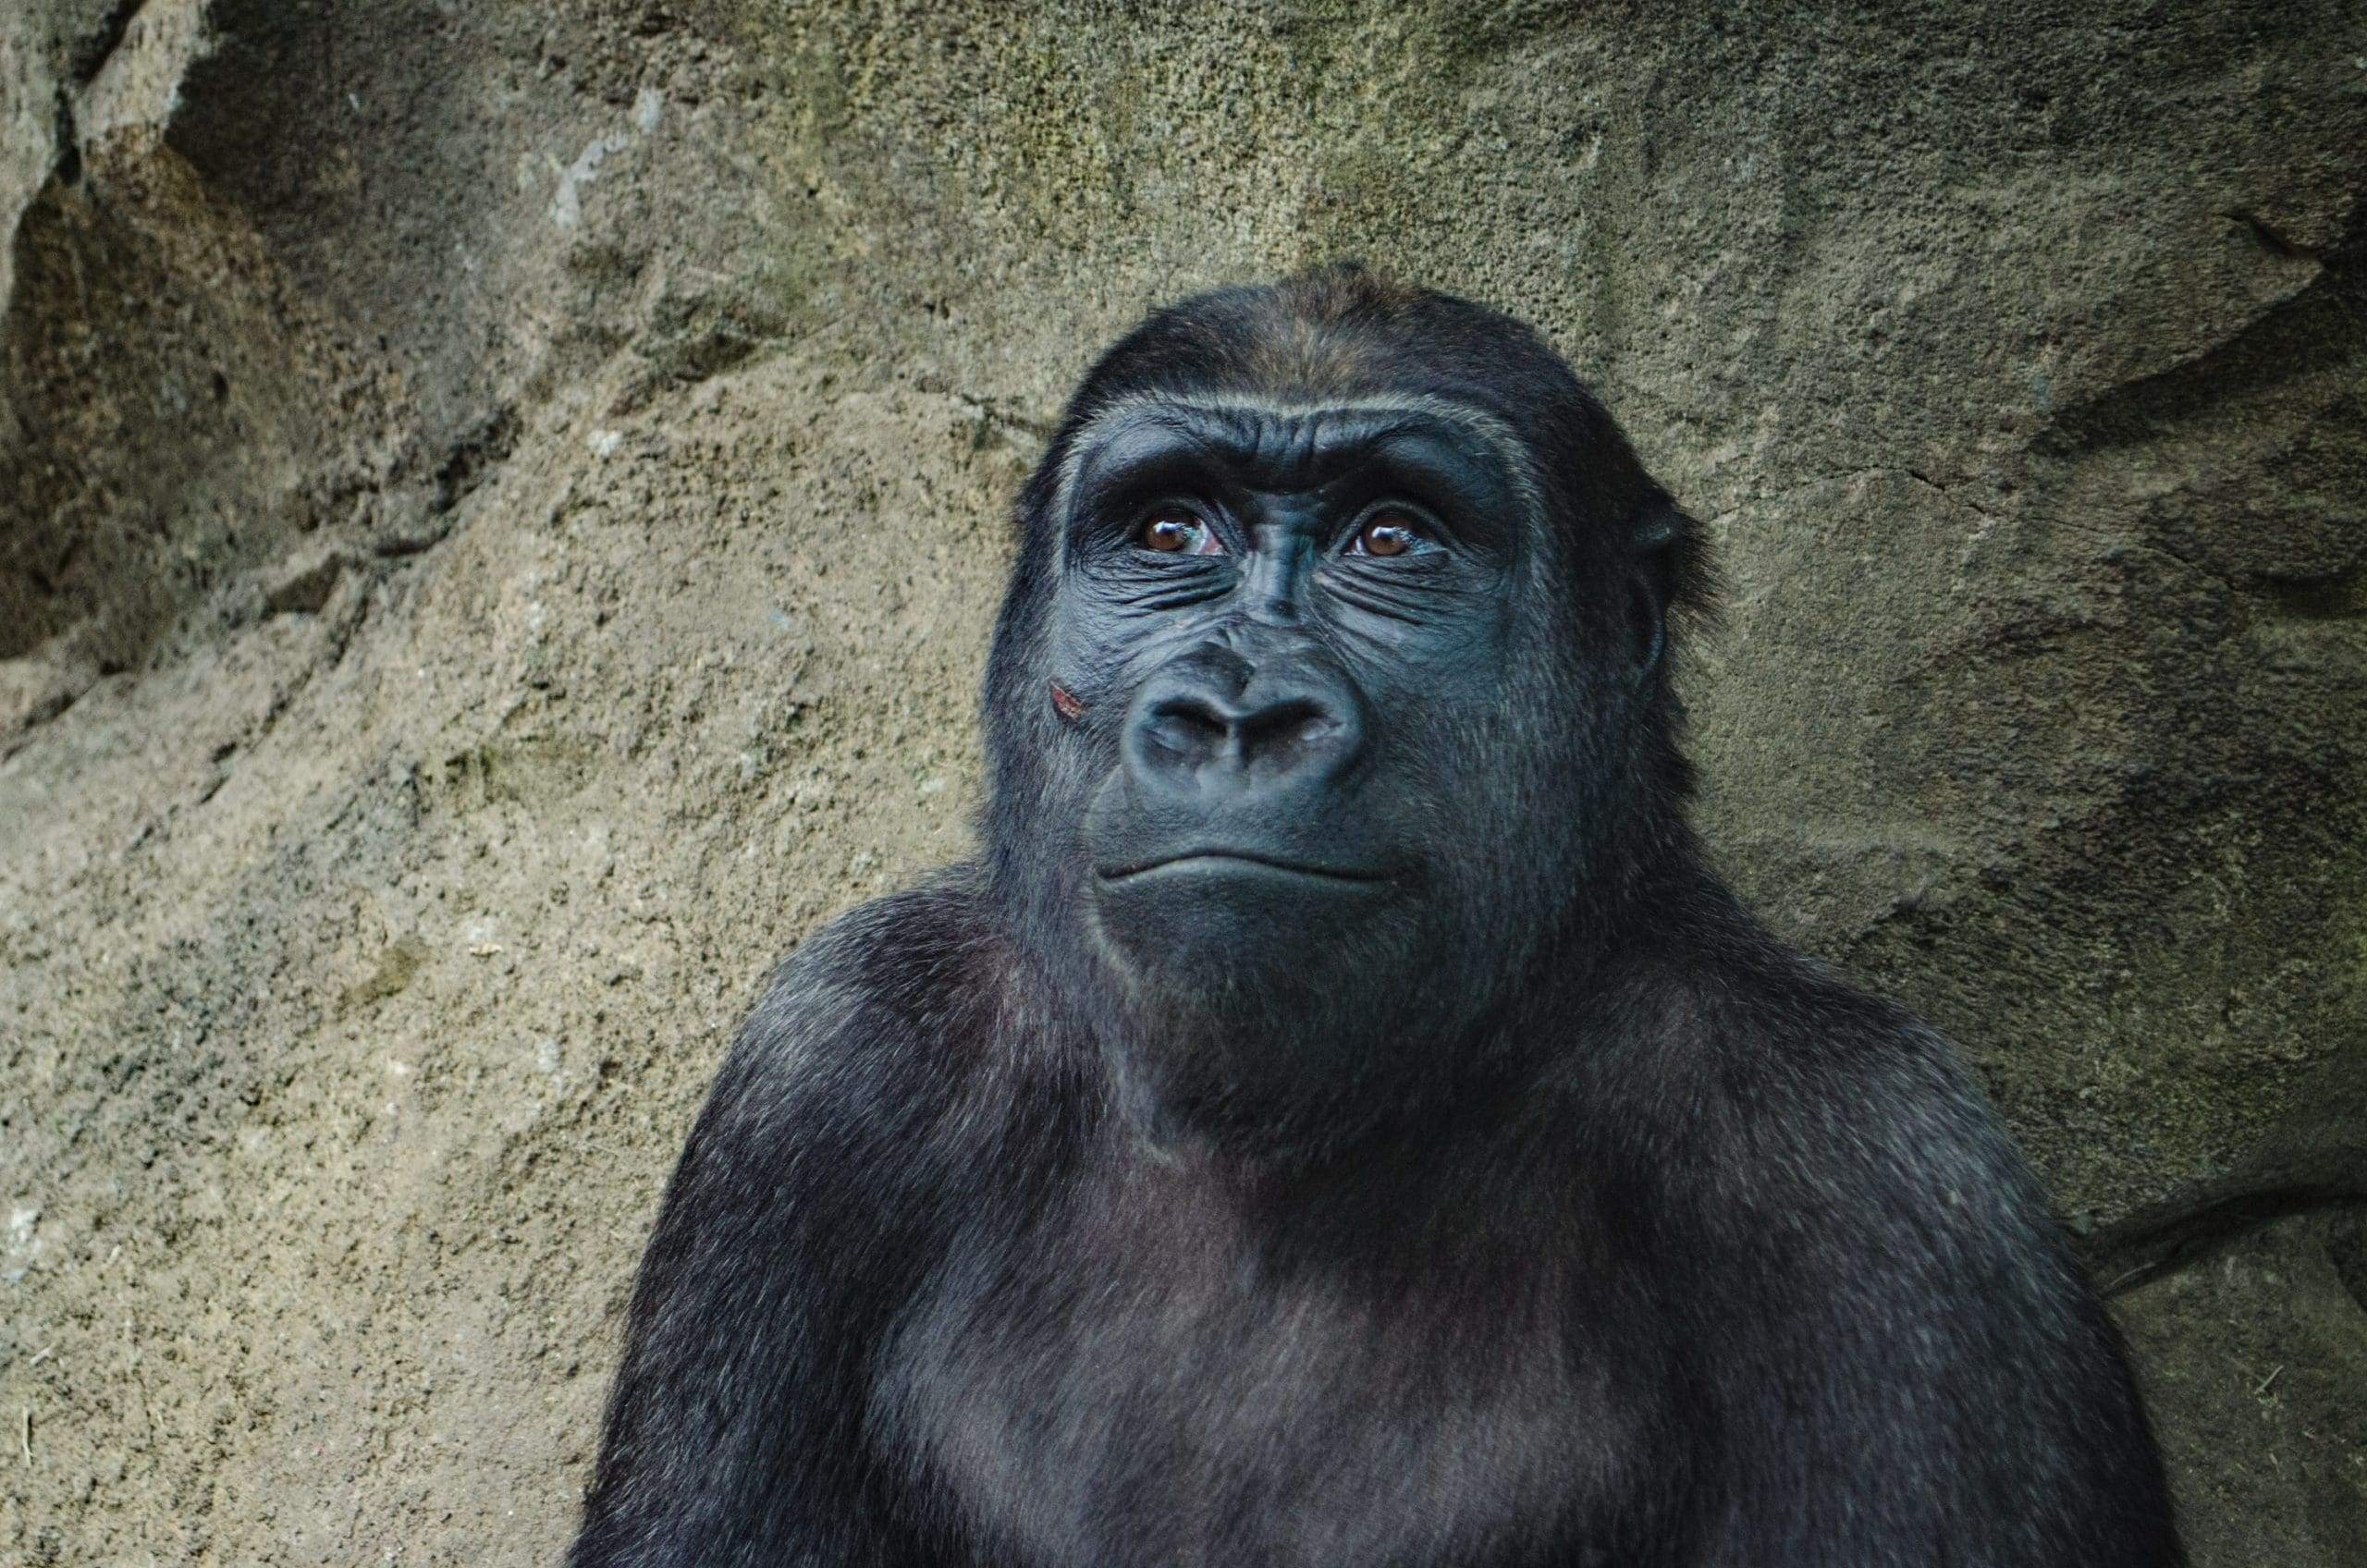 Happy Gorilla image by Kelly Sikkema, downloaded via unsplash kelly-sikkema-r077pfFsdaU-unsplash